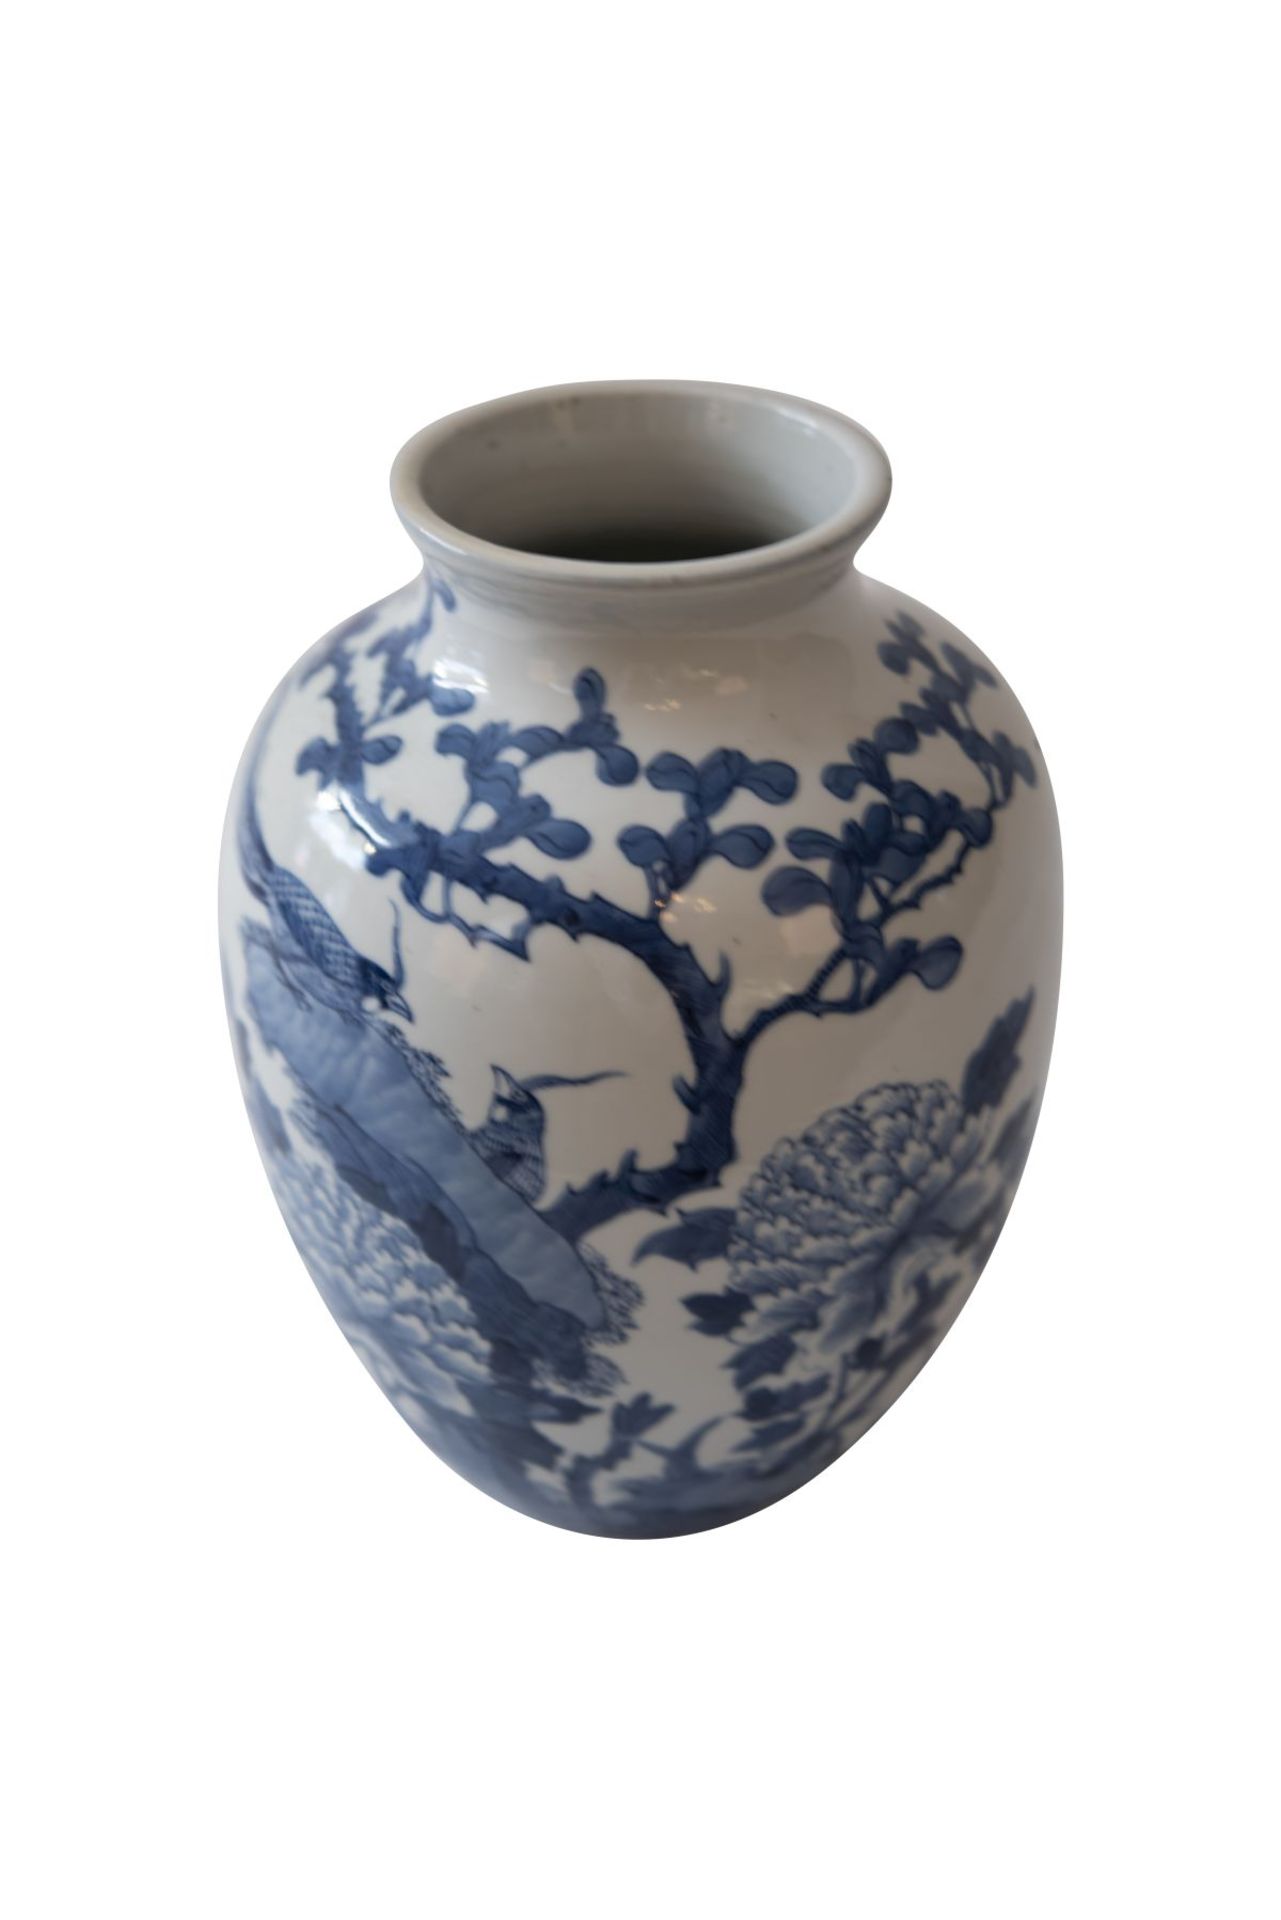 Blue and white vase - Image 3 of 8